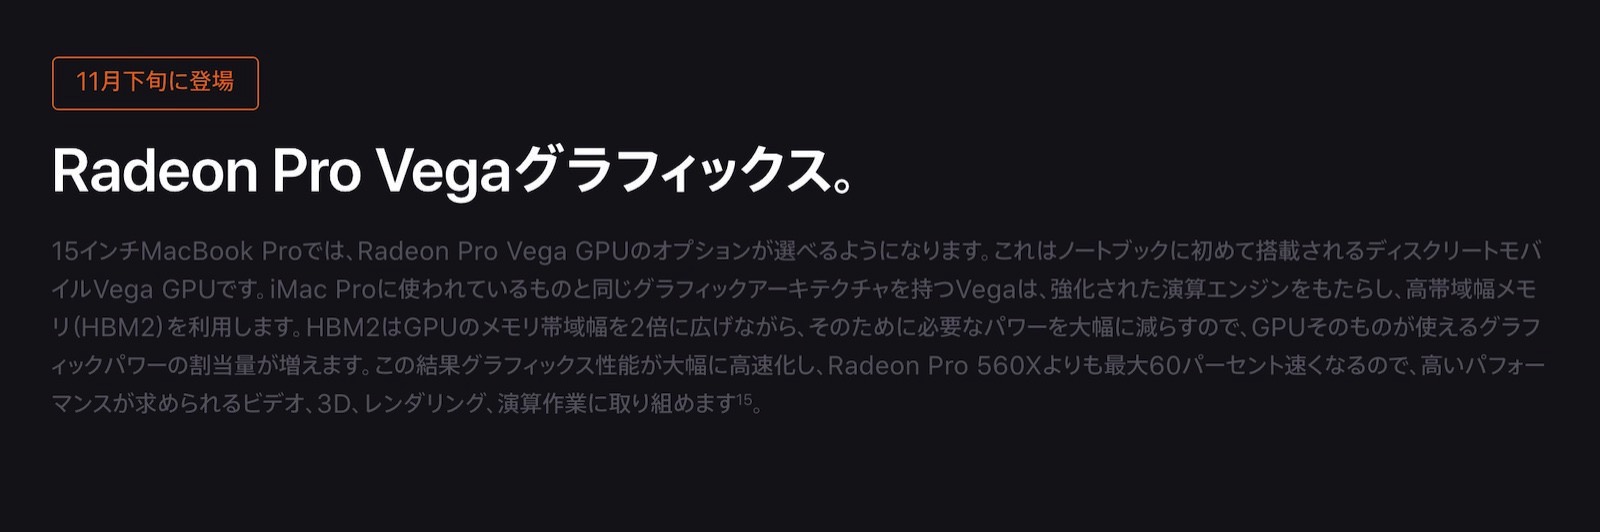 MacBook-Pro-Vega-Graphics-Option.jpg